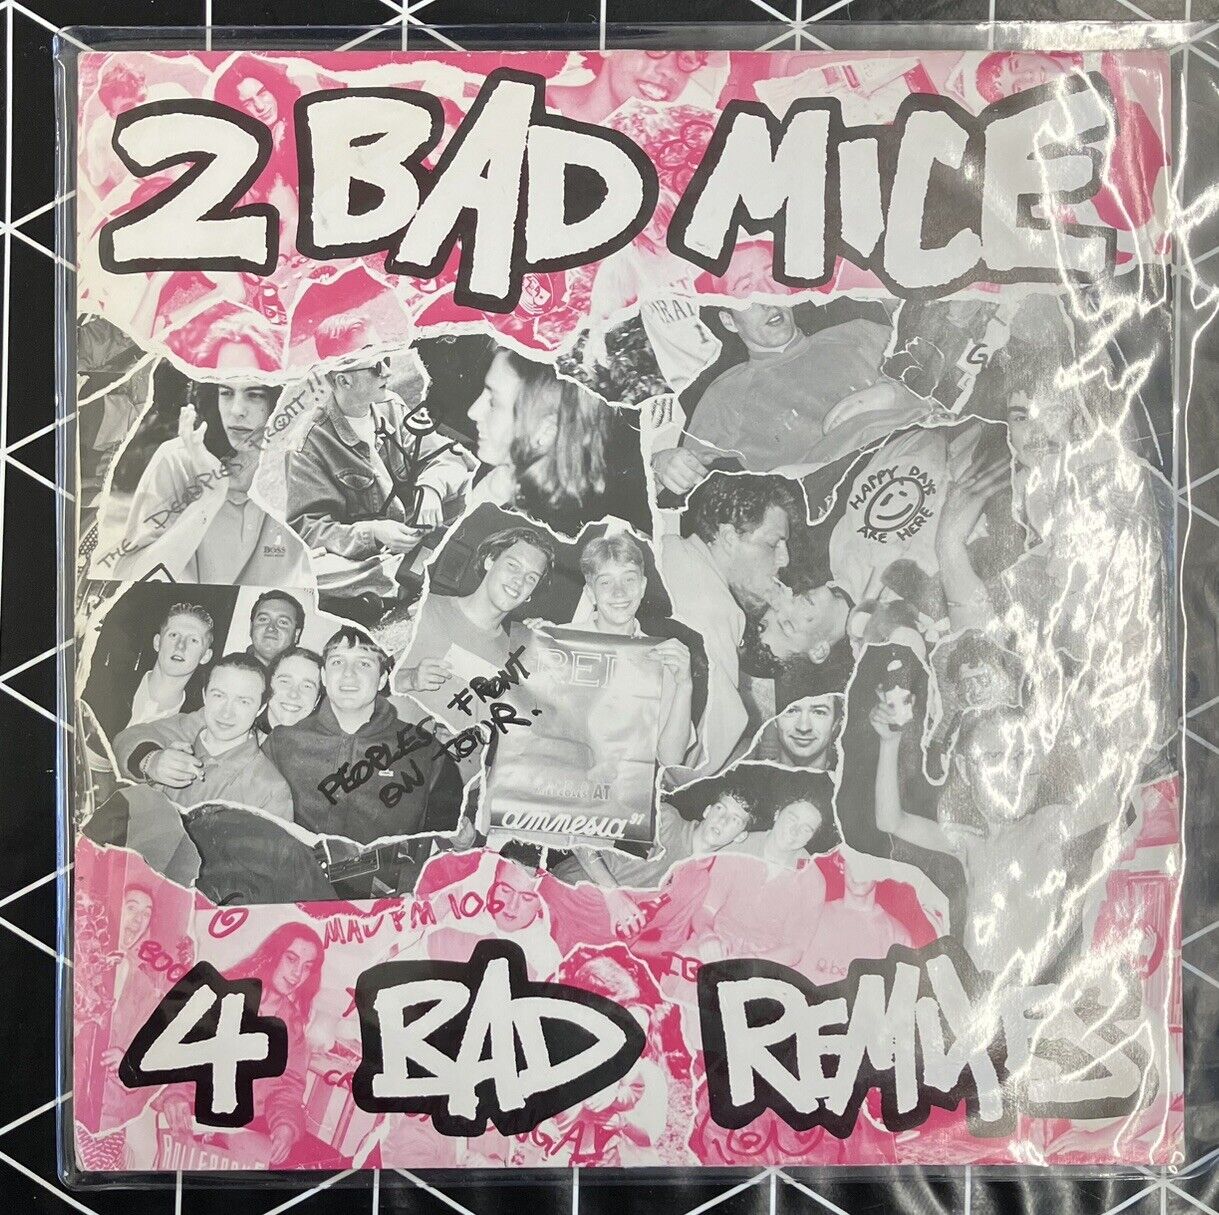 2 Bad Mice - 4 Bad Remixes - 1992 Moving Shadow 12” Vinyl - SHADOW 14R